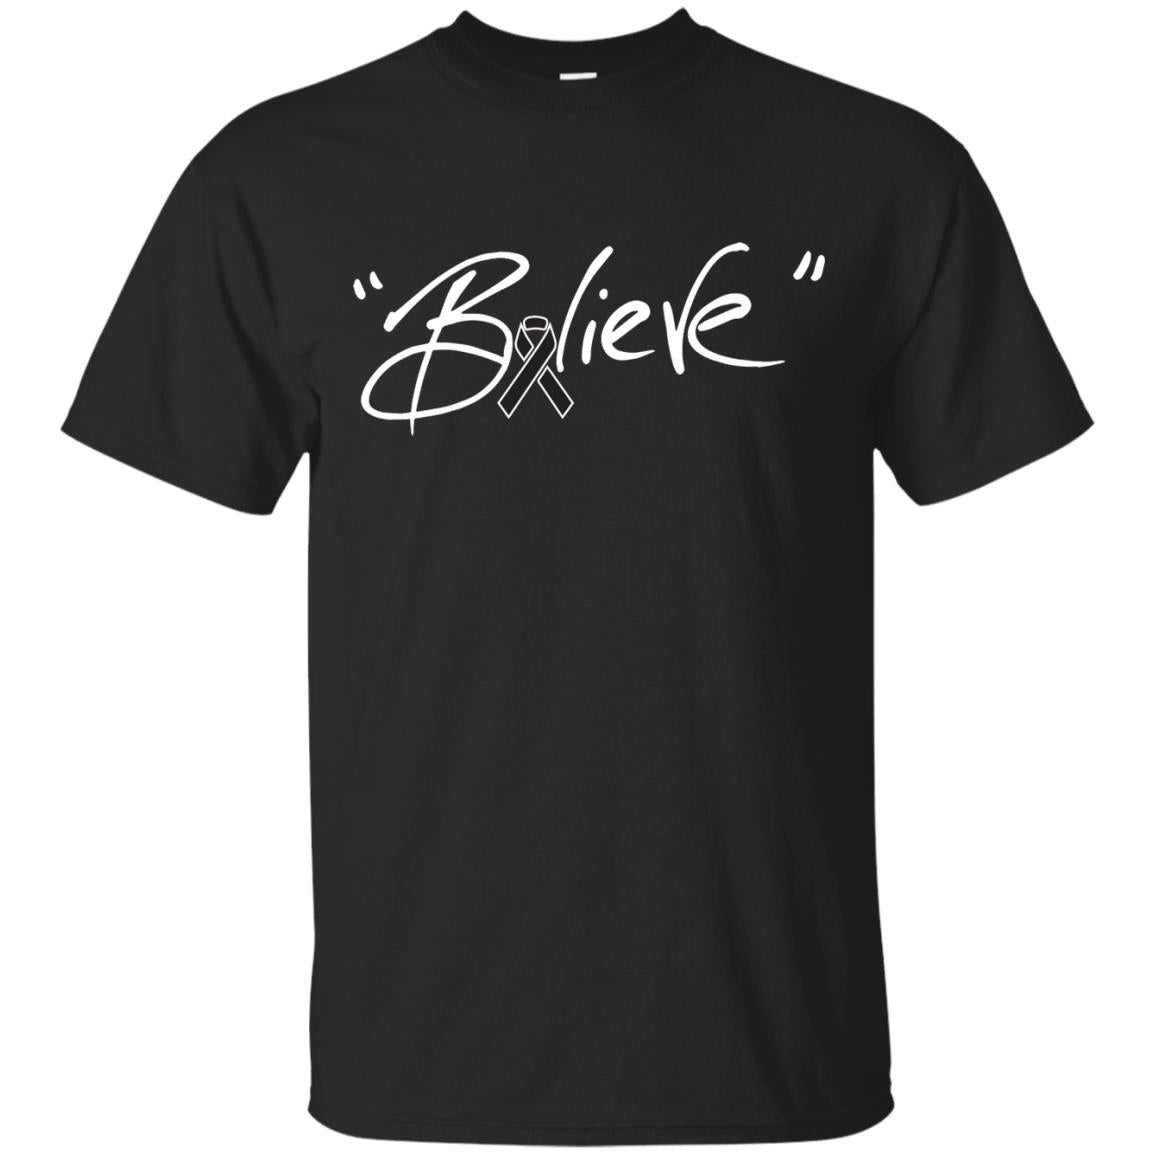 Melanoma Cancer Awareness Shirt Black Ribbon BelieveG200 Gildan Ultra Cotton T-Shirt